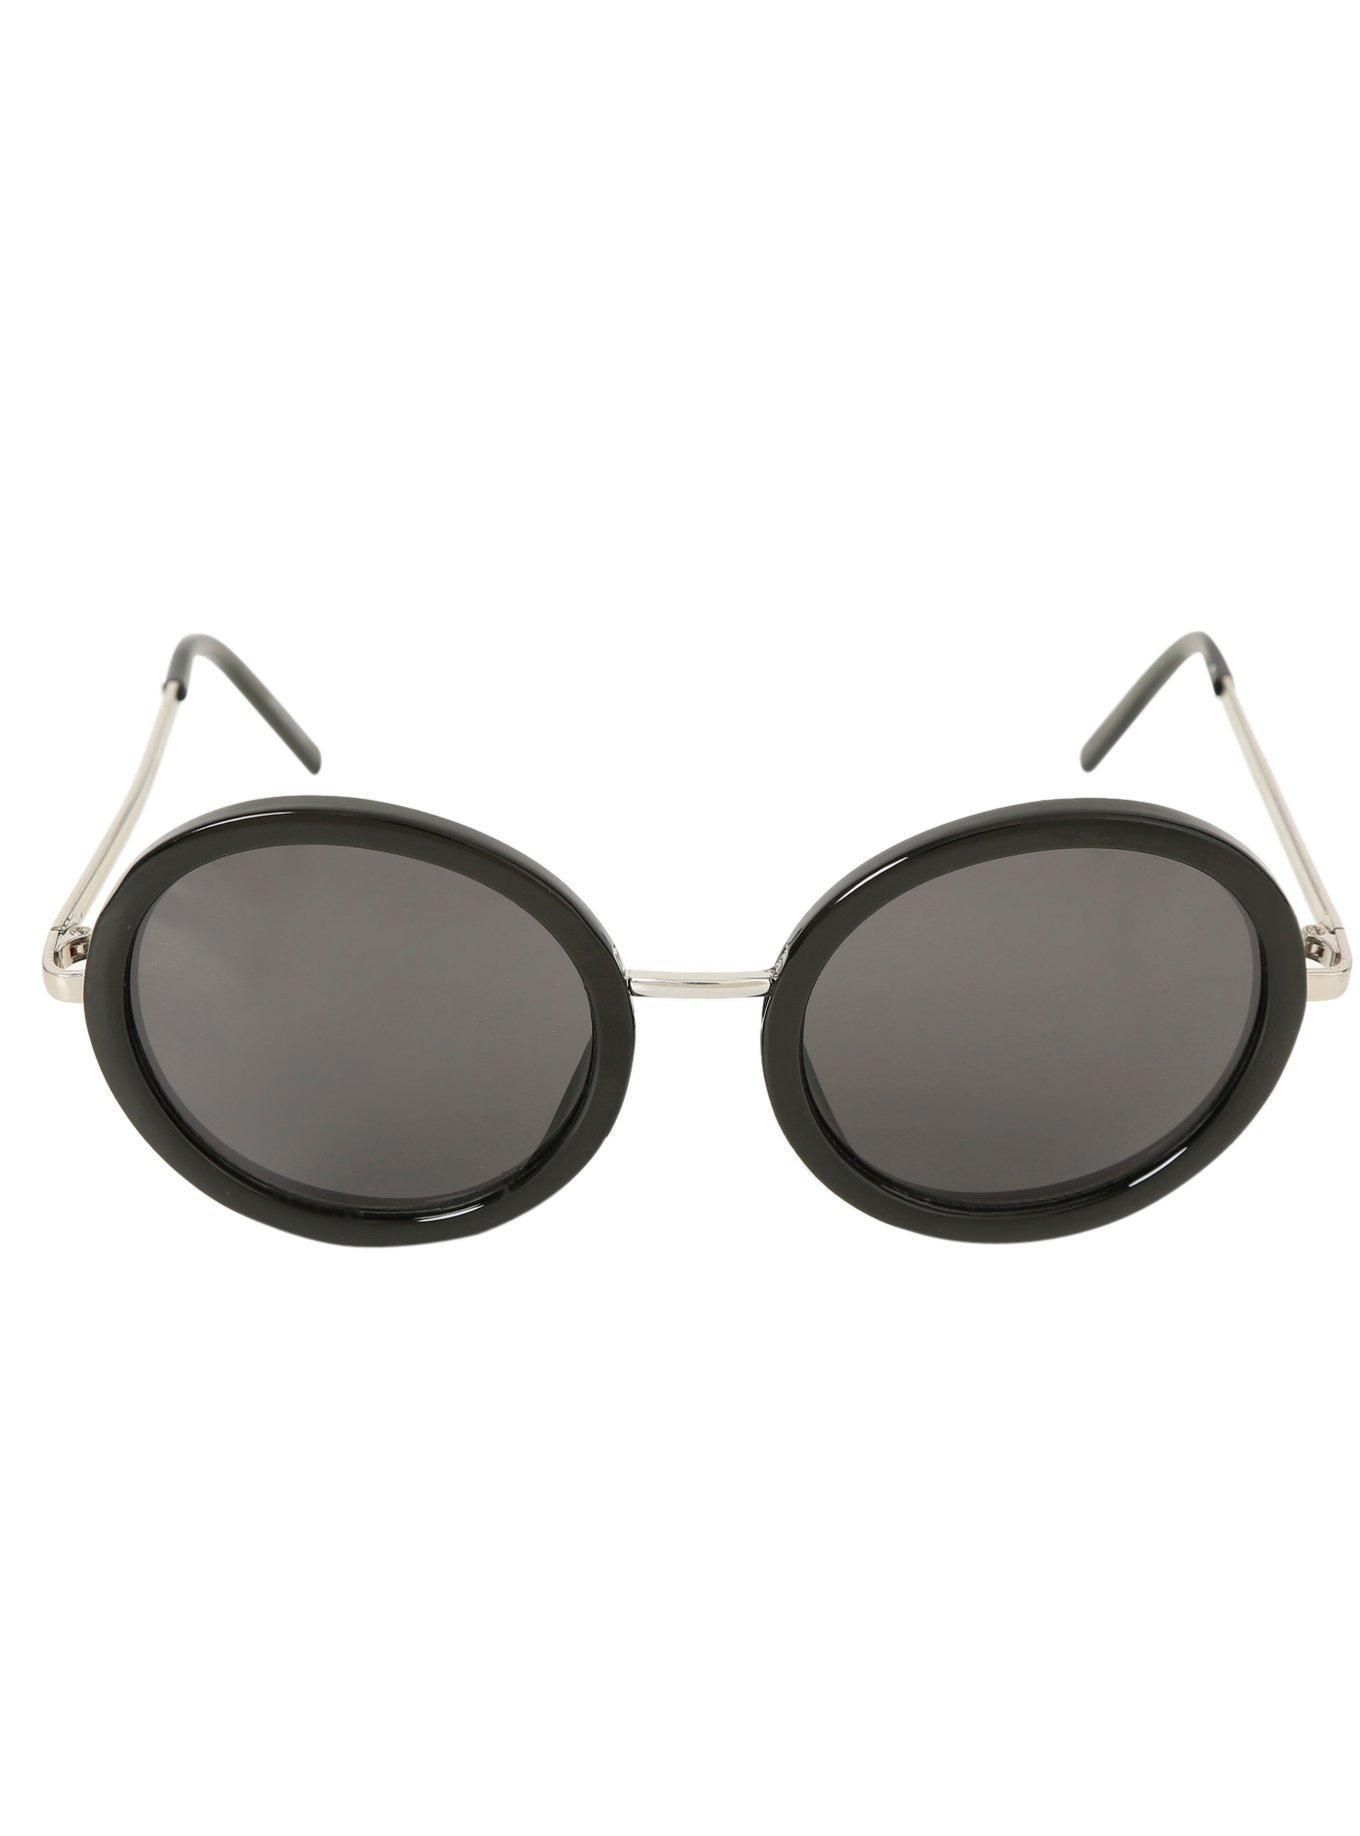 Black Round With Silver Arm Sunglasses, , alternate